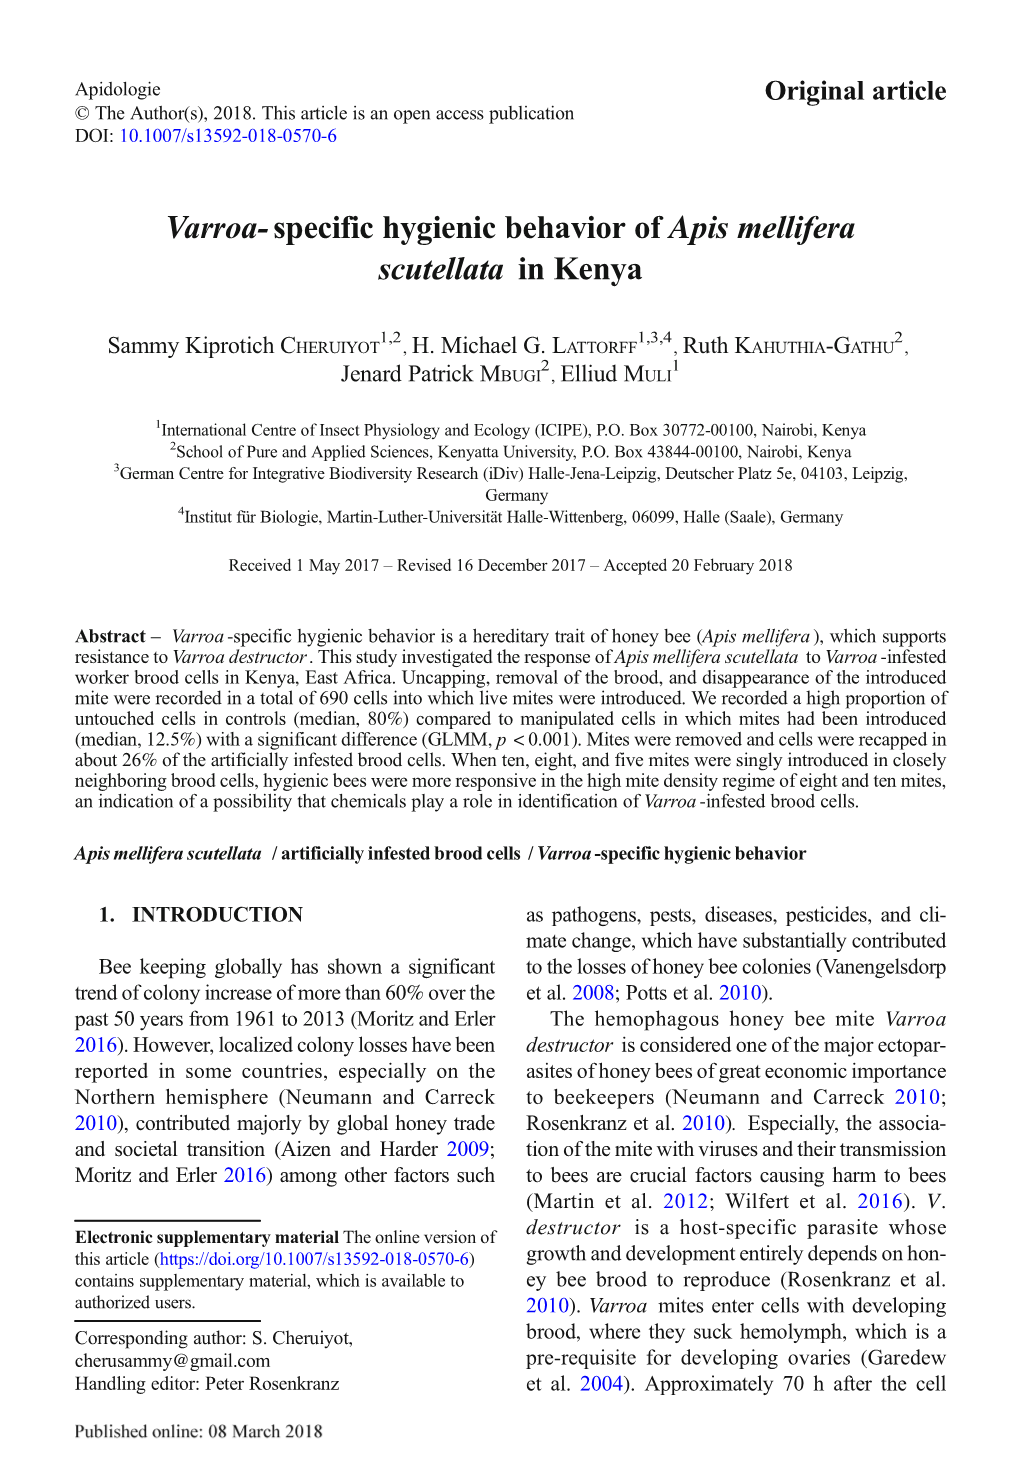 Varroa-Specific Hygienic Behavior of Apis Mellifera Scutellata in Kenya